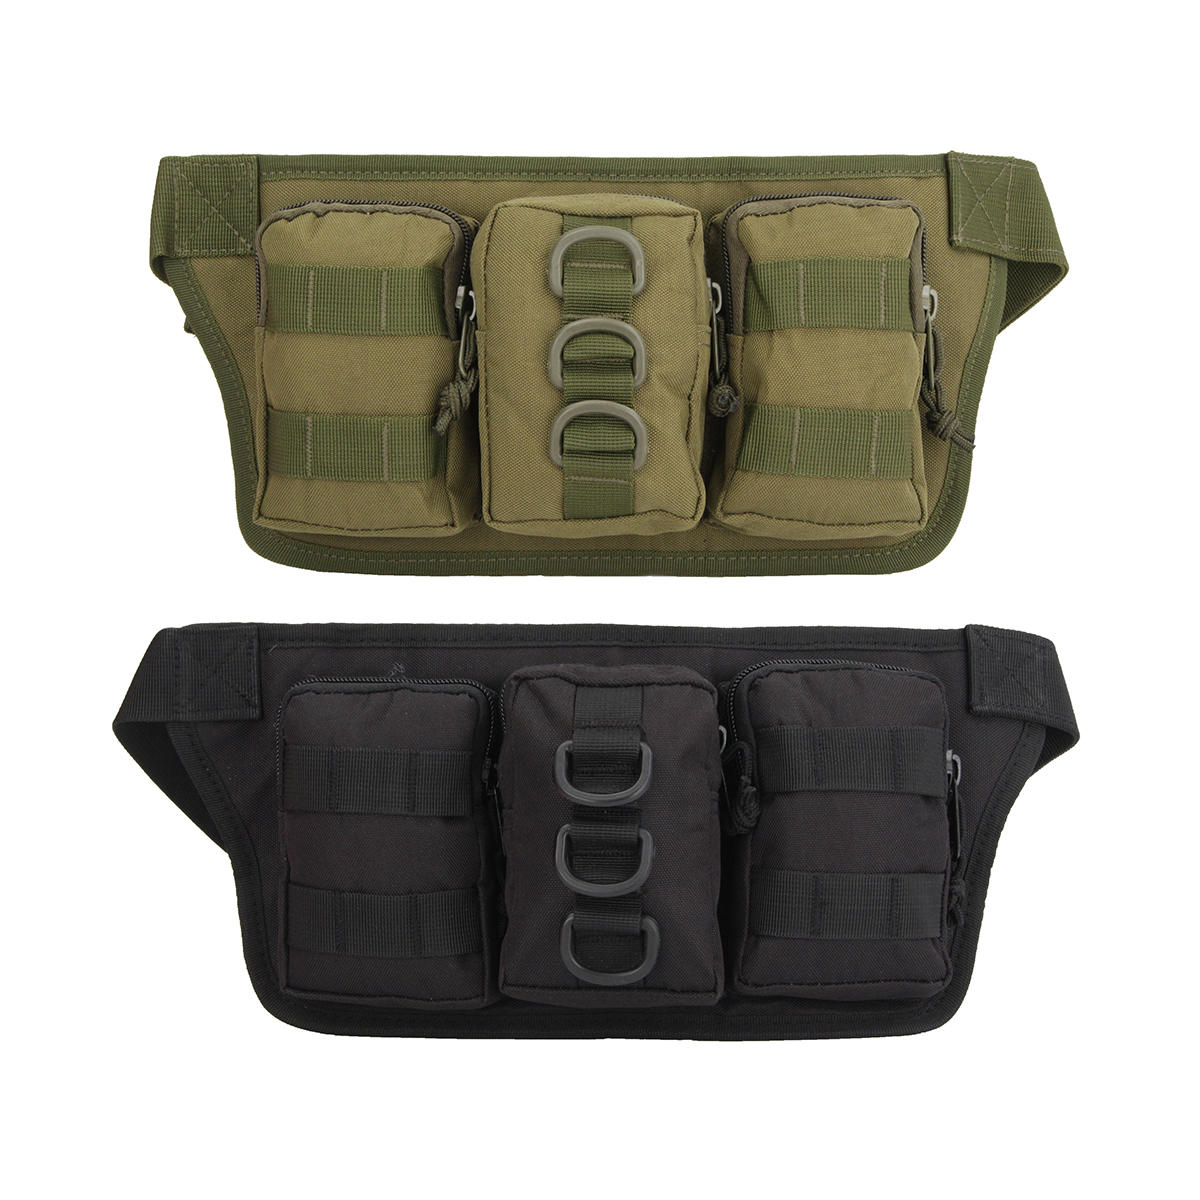 IPRee® 1PC Outdoor Sport 3 Pockets High Capacity Tactical Waist Bag Handbag Gym Bag For Running Fitness Hiking Camping 